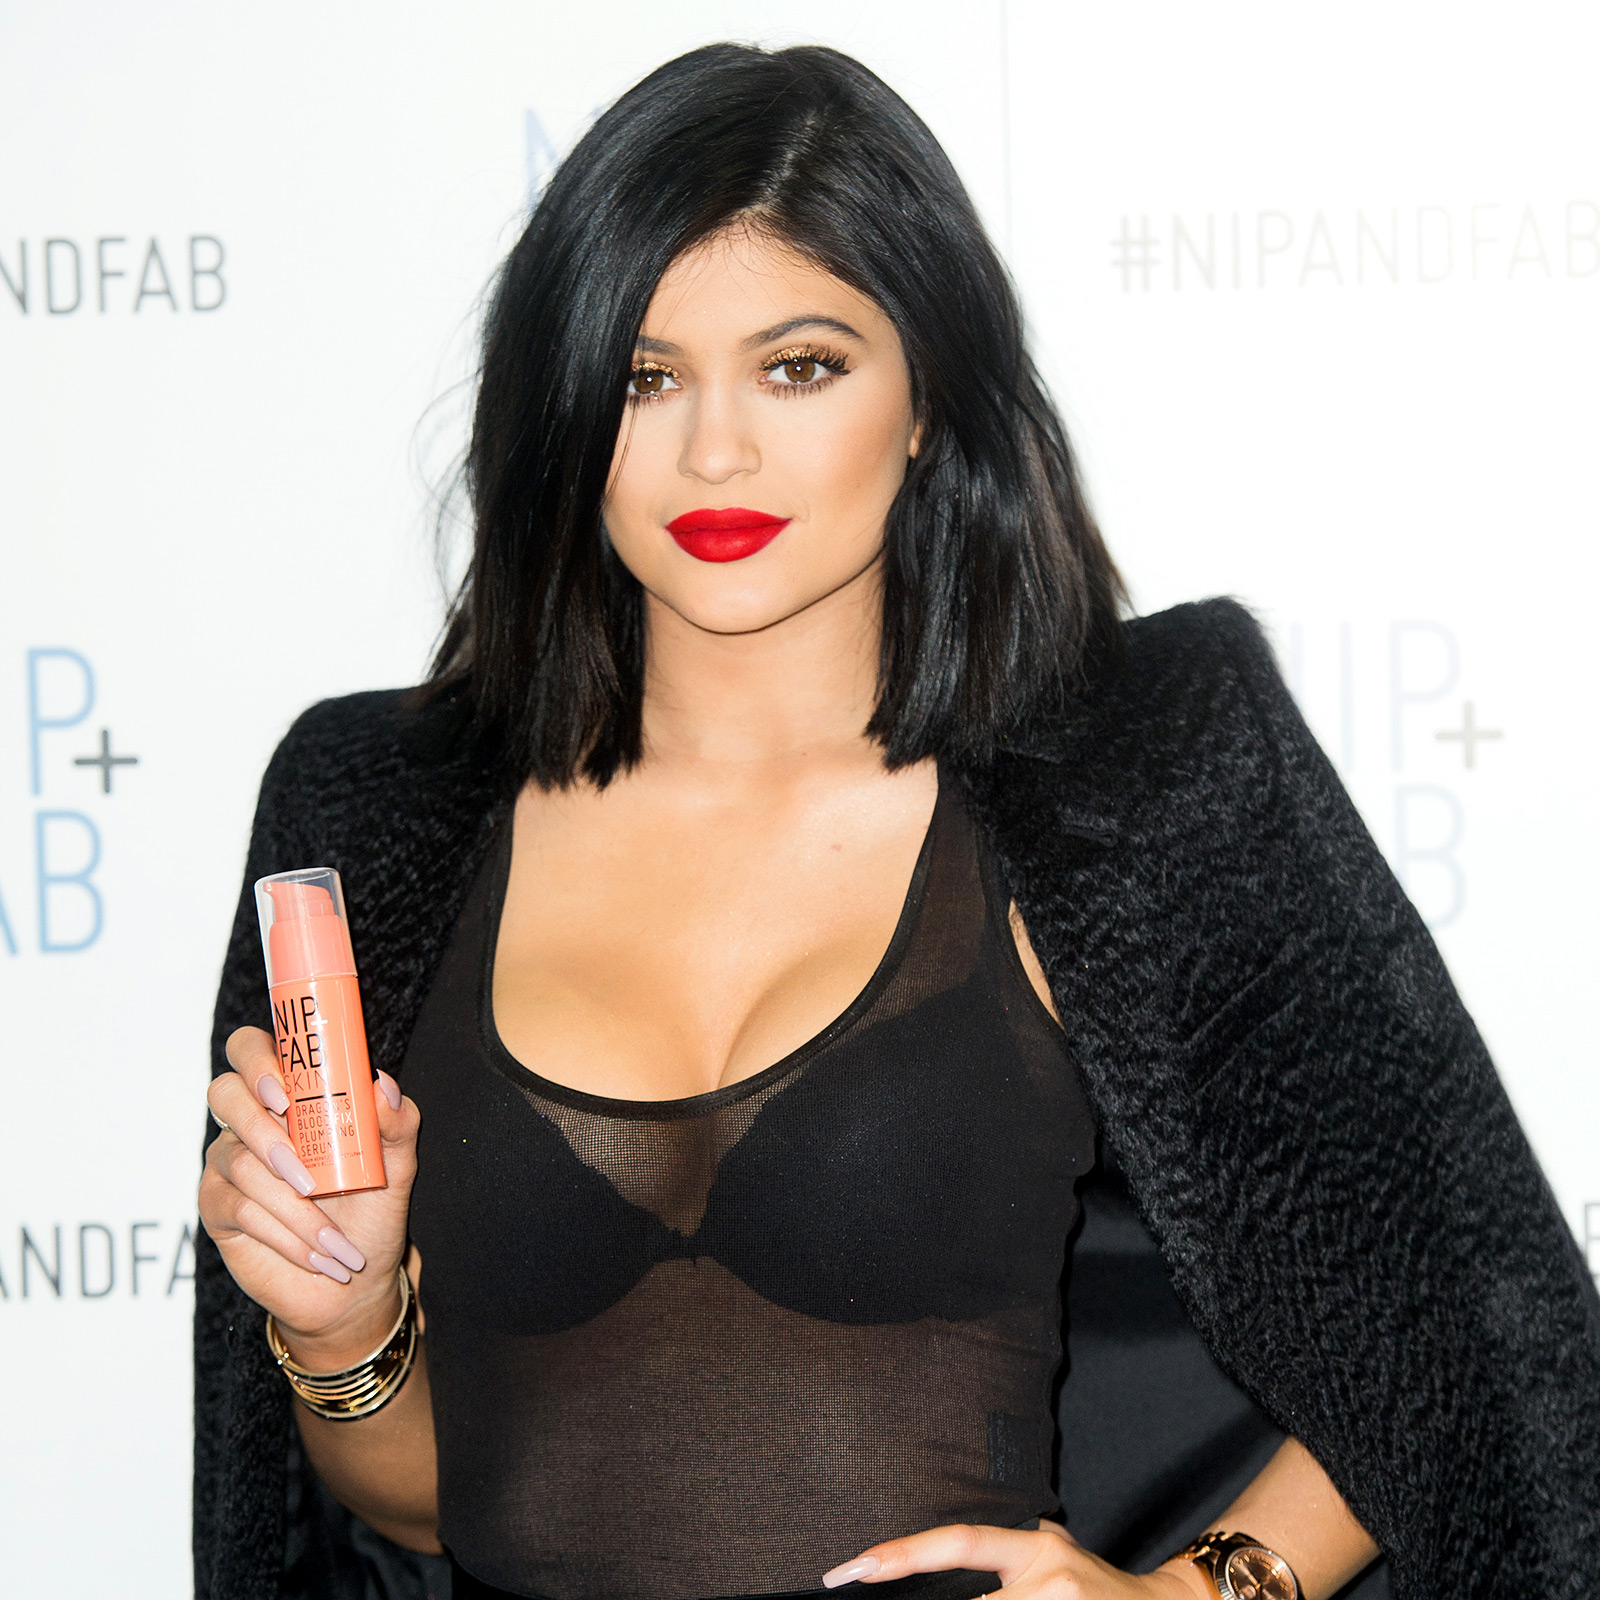 Kylie Jenner says she never had boobs inplant.